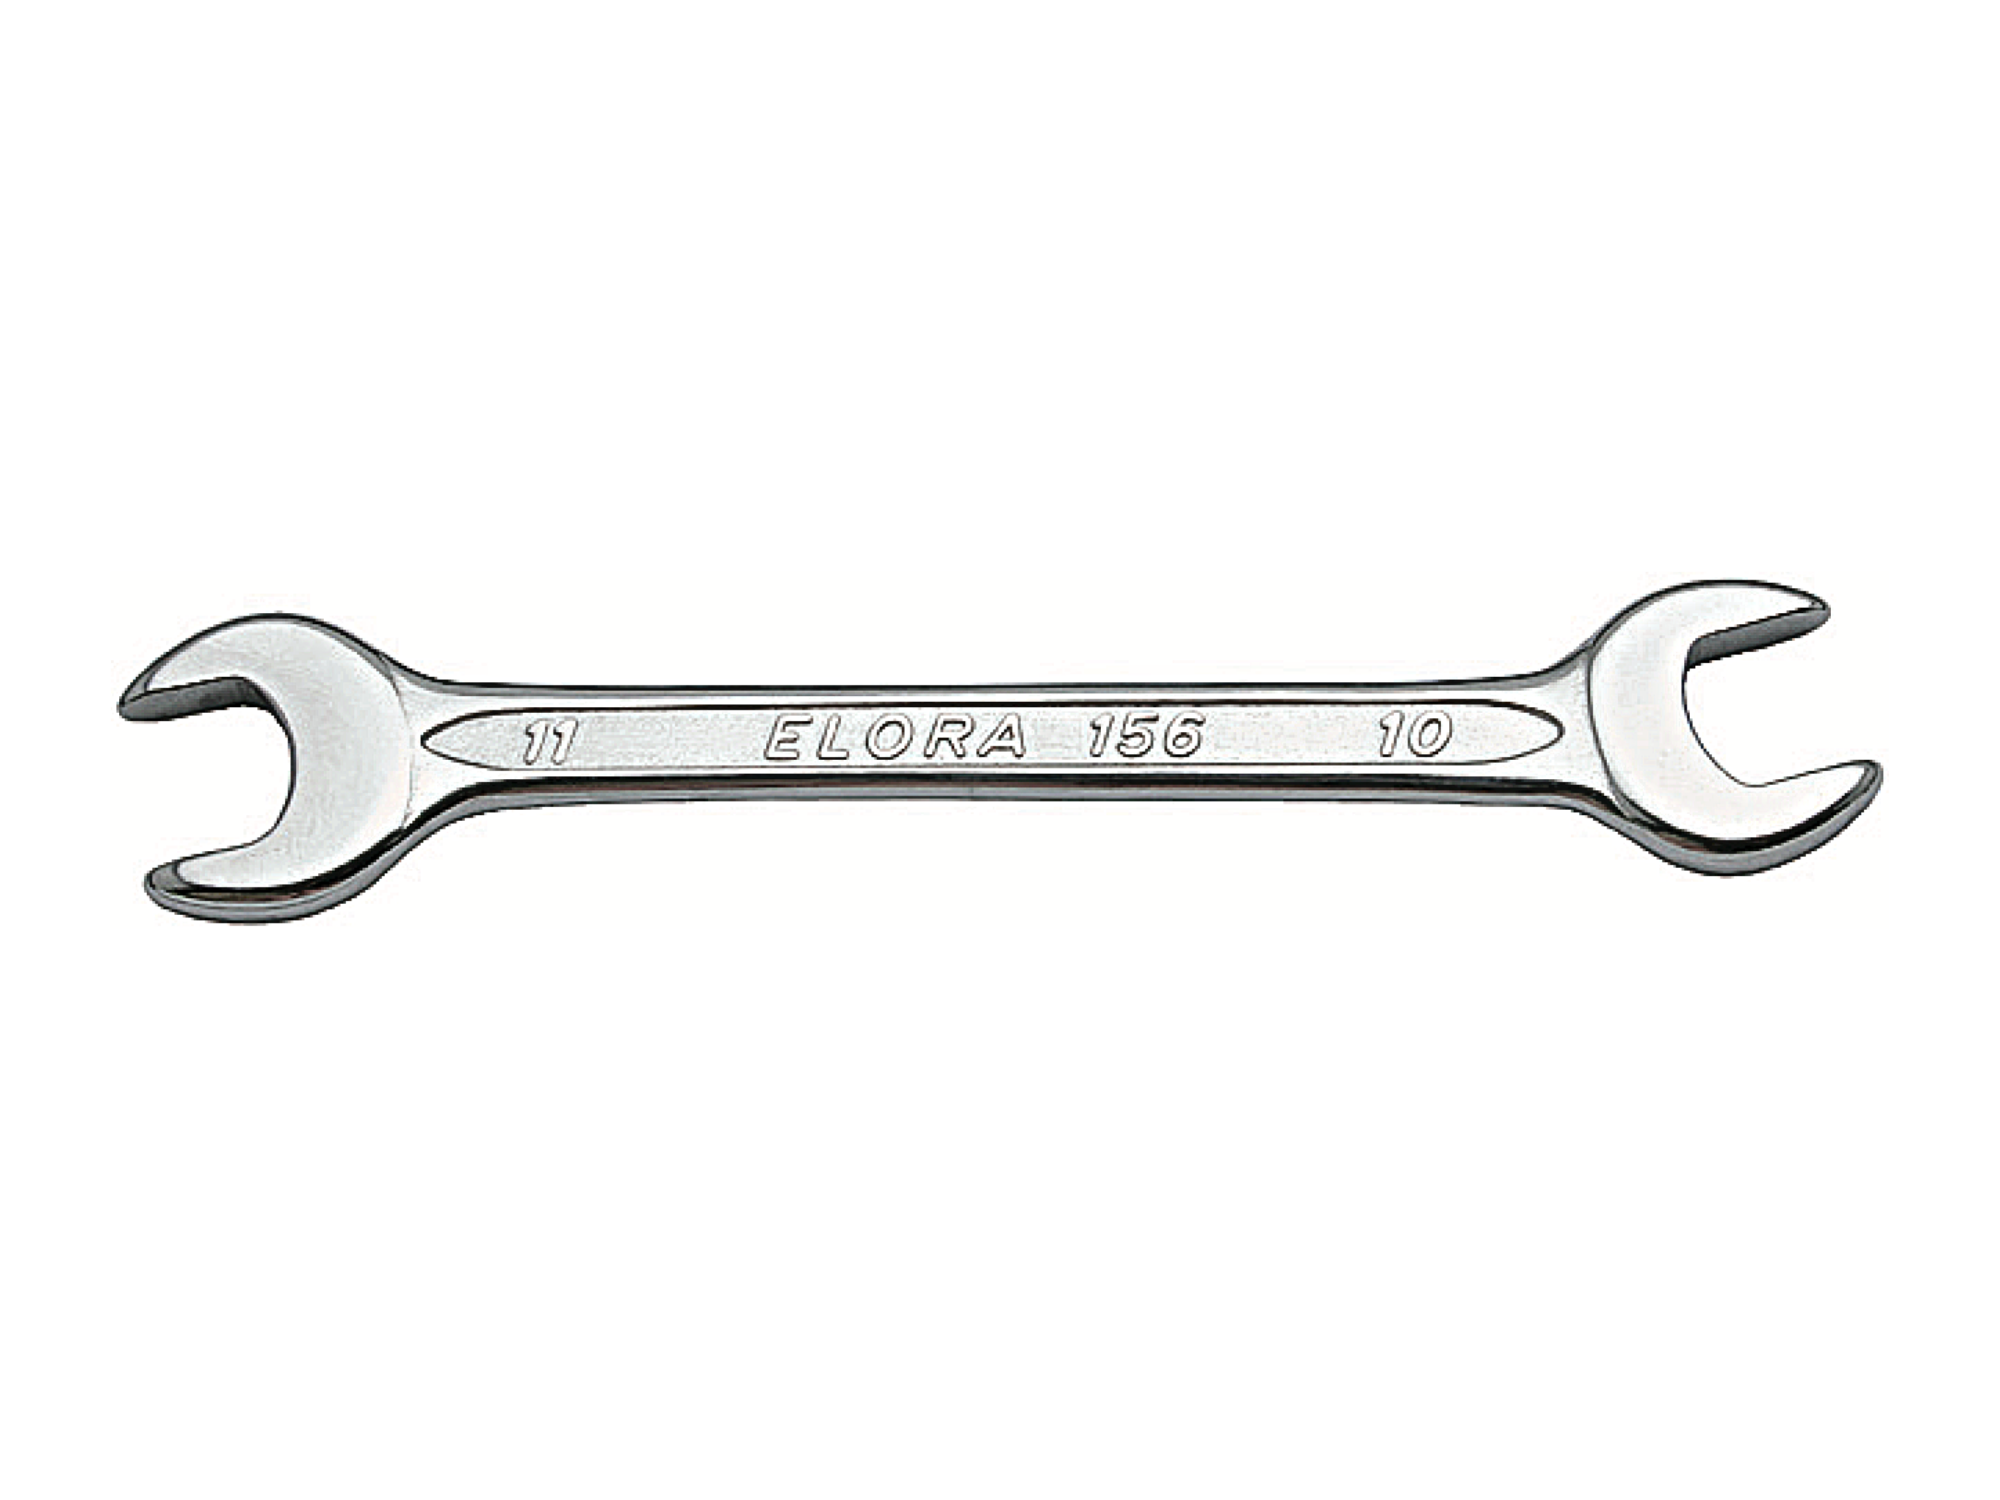 ELORA 156 Midget Open Ended Spanner Metric (ELORA Tools) - Premium Midget Open Ended Spanner from ELORA - Shop now at Yew Aik.